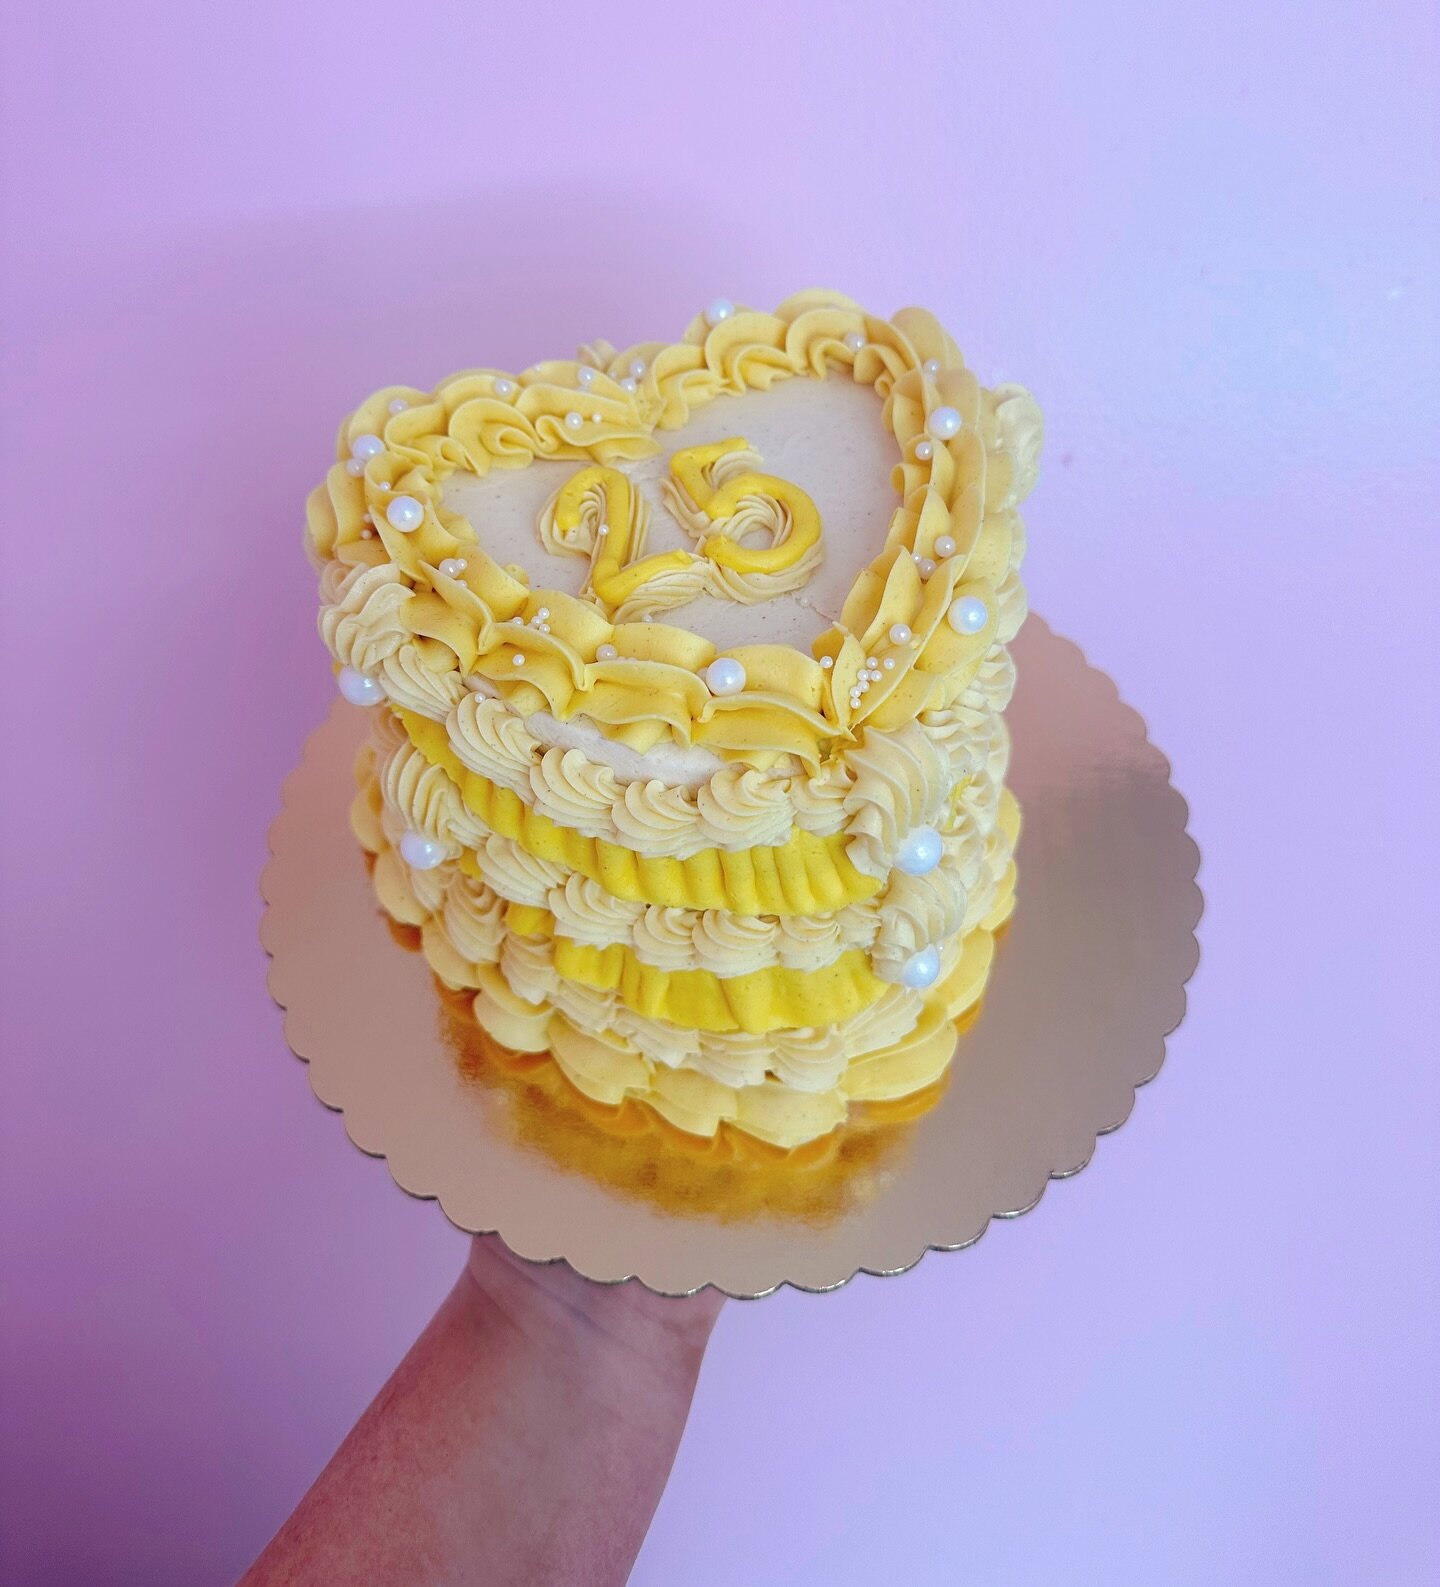 Our 6&rdquo; frilly vintage heart cake in Yellow!💛🌼🤩
&bull;
&bull;
&bull;
&bull;
&bull;
#cake #cakedecorating #cakedesign #cakedecorator #cakeoftheday #cakeofinstagram #cakestyle #vintageheartcake #frillycake #cakeofinsta #birthdaycake